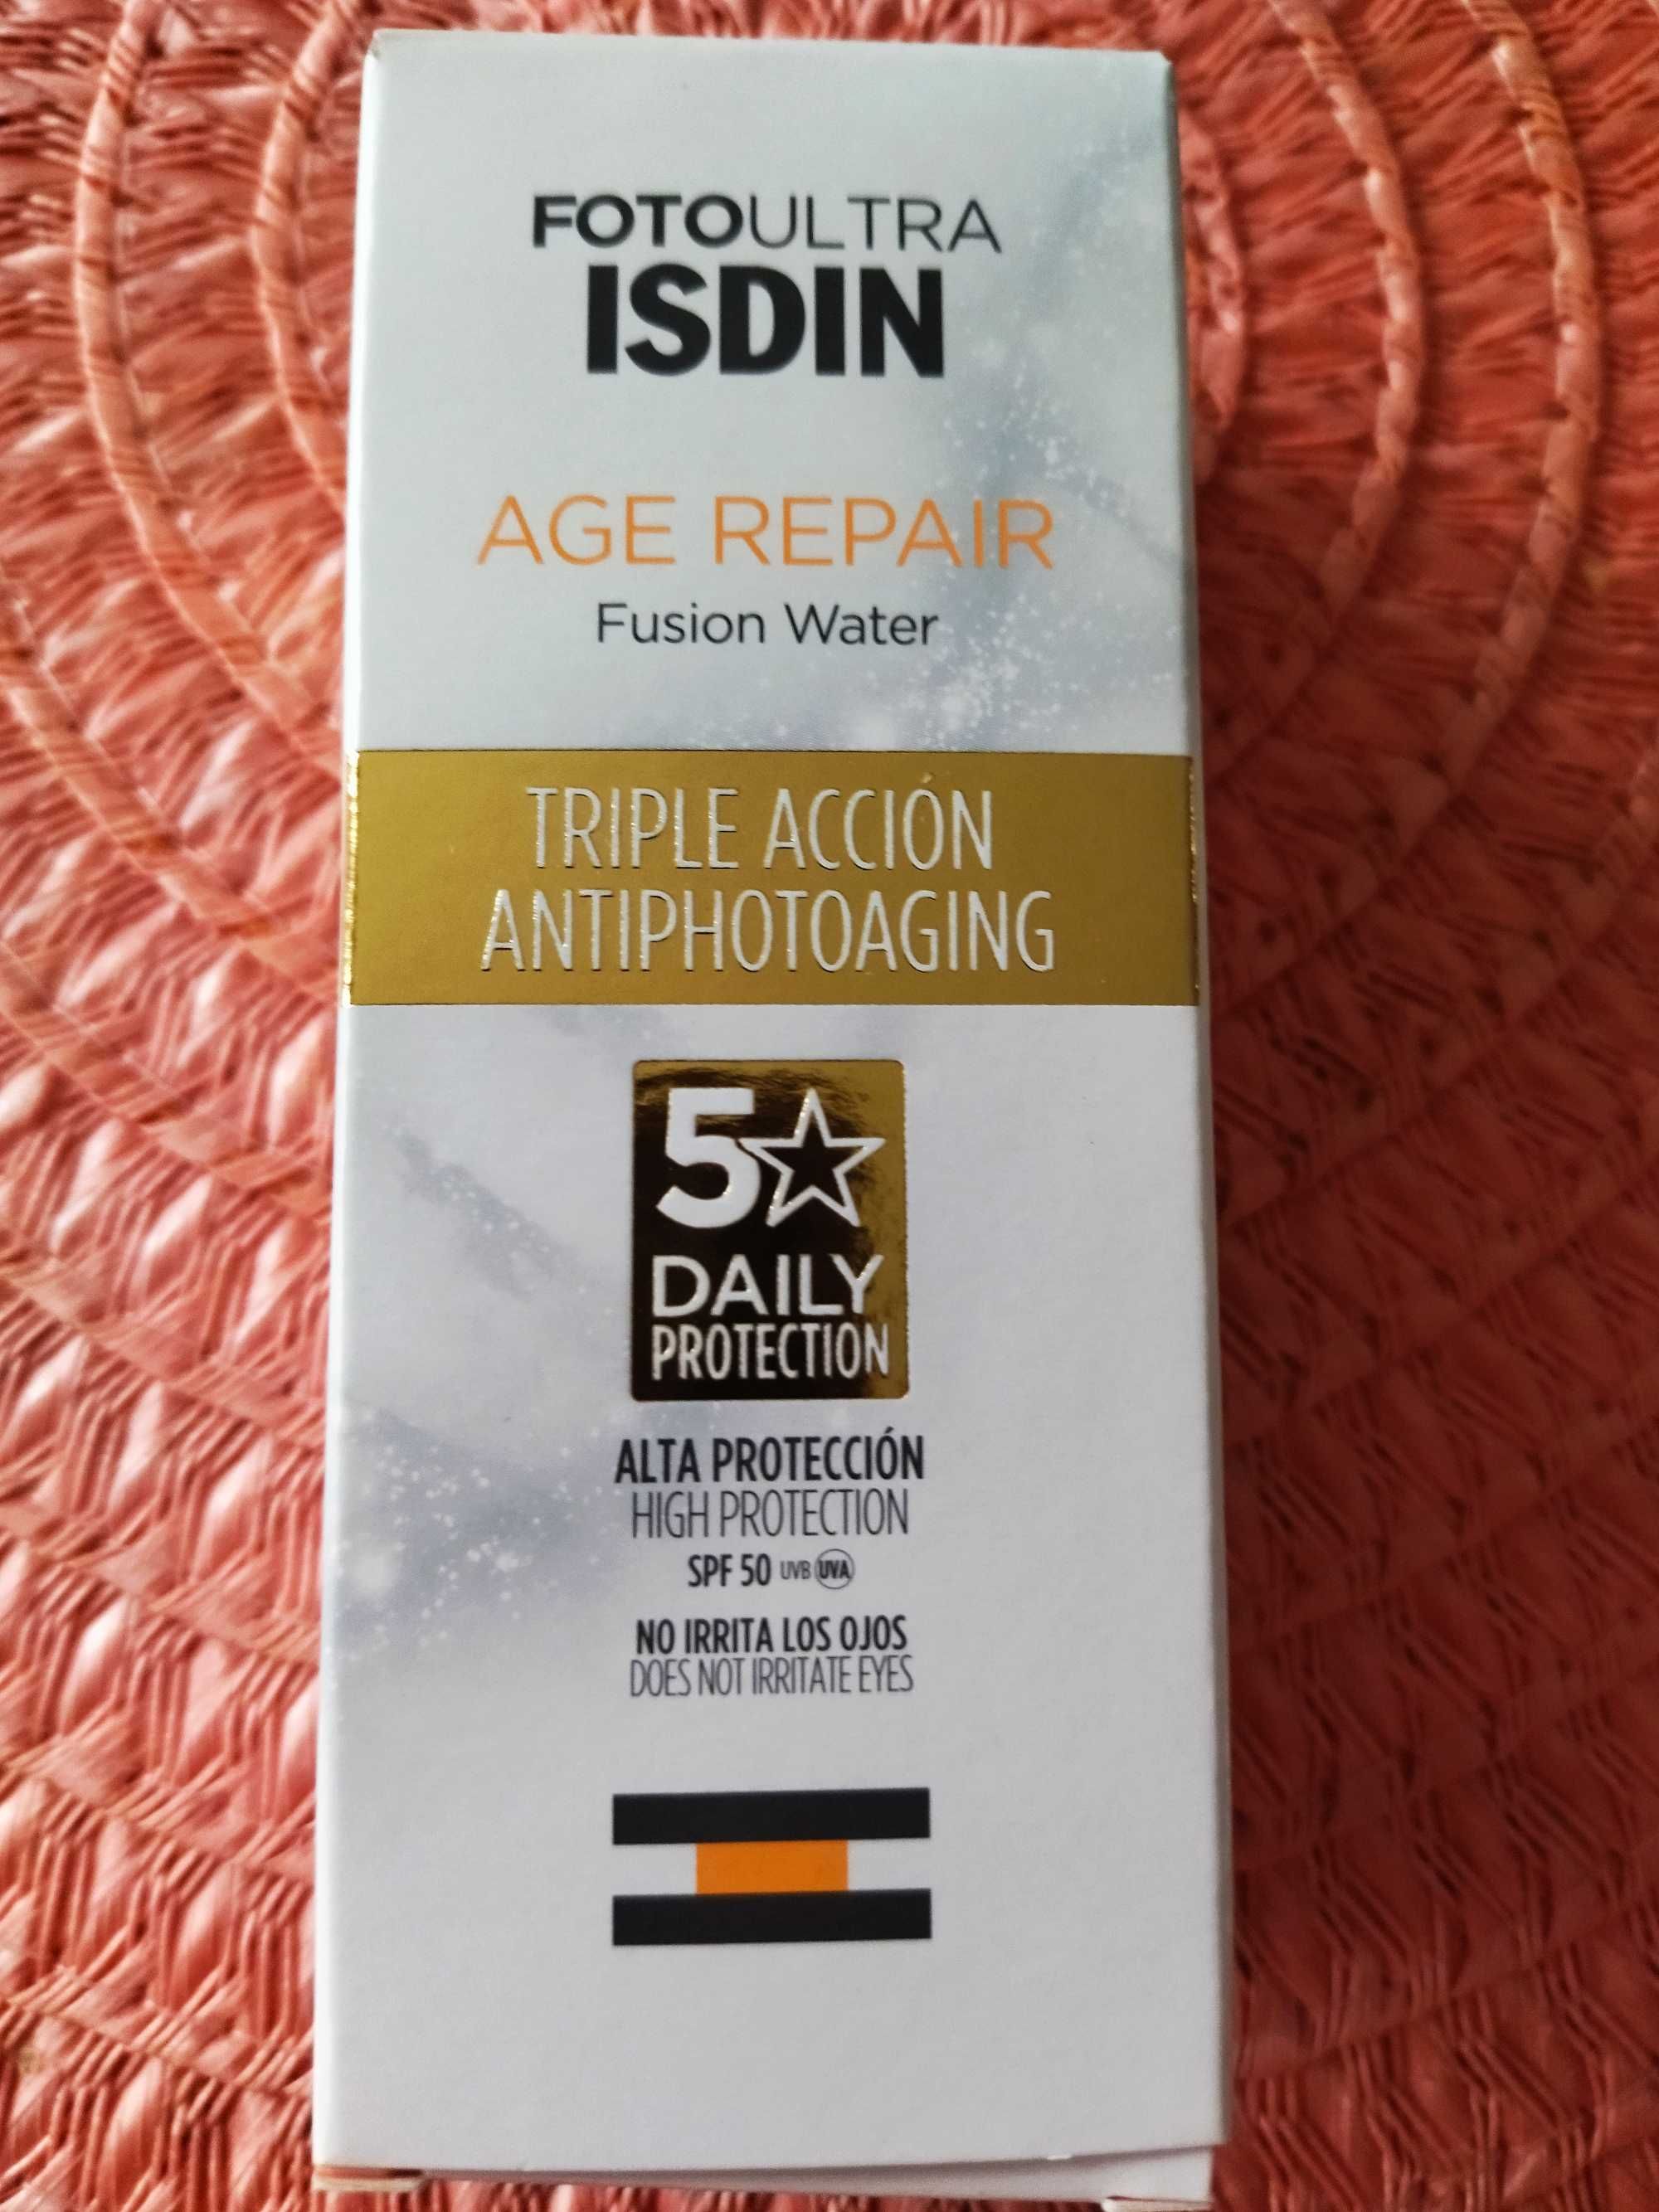 ISDIN Fotoultra Age Repair SPF50 - 50 ml